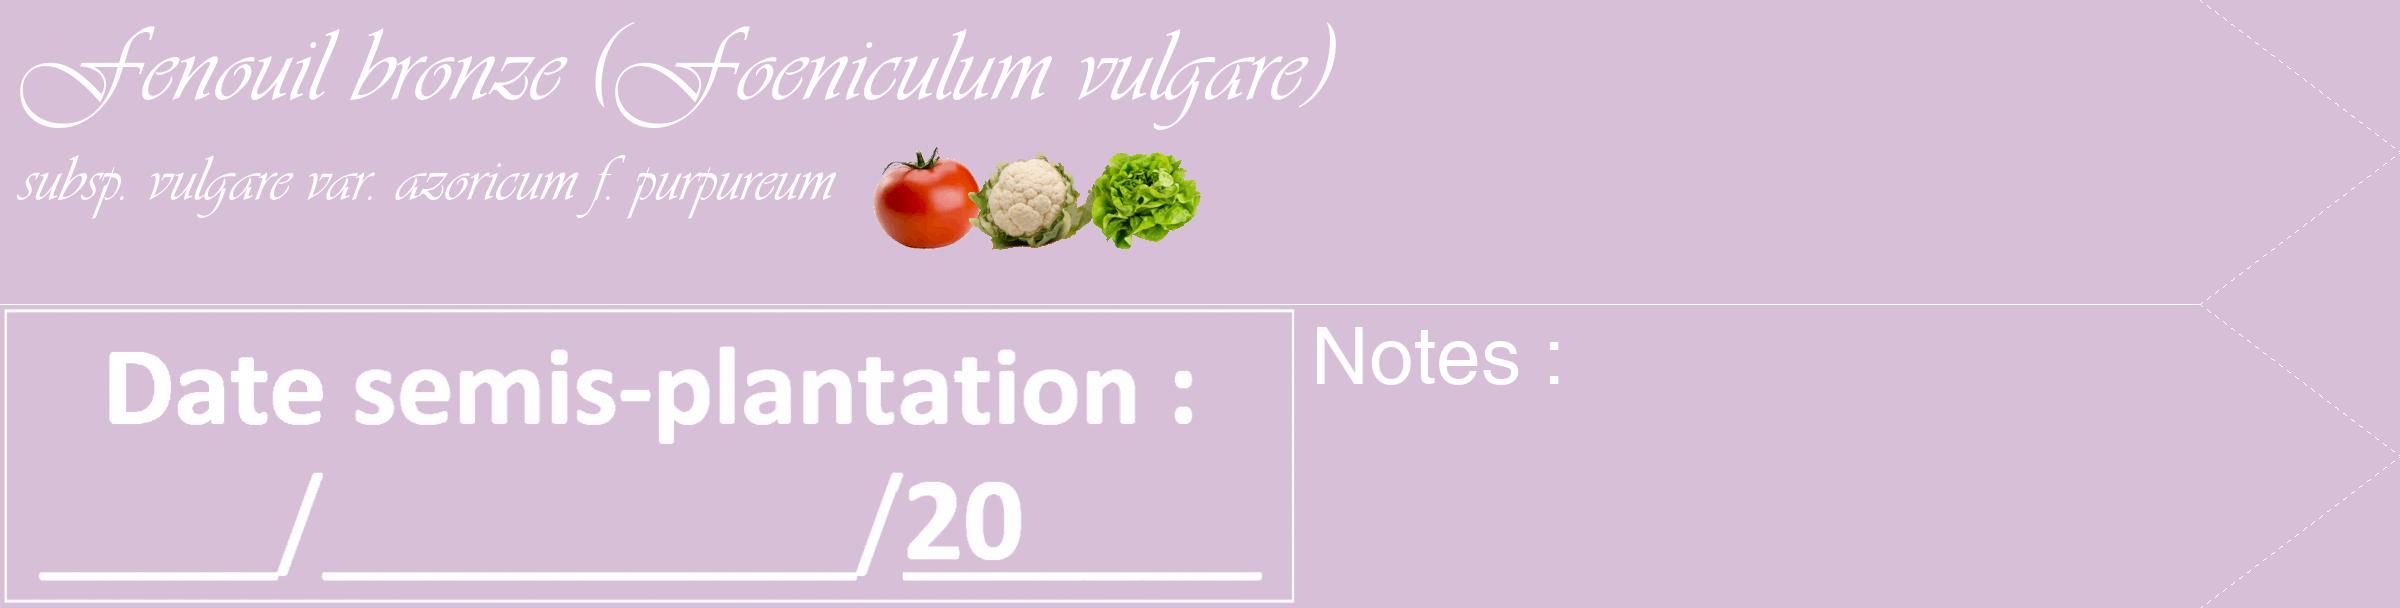 Étiquette de : Foeniculum vulgare subsp. vulgare var. azoricum f. purpureum - format c - style blanche54_simple_simpleviv avec comestibilité simplifiée